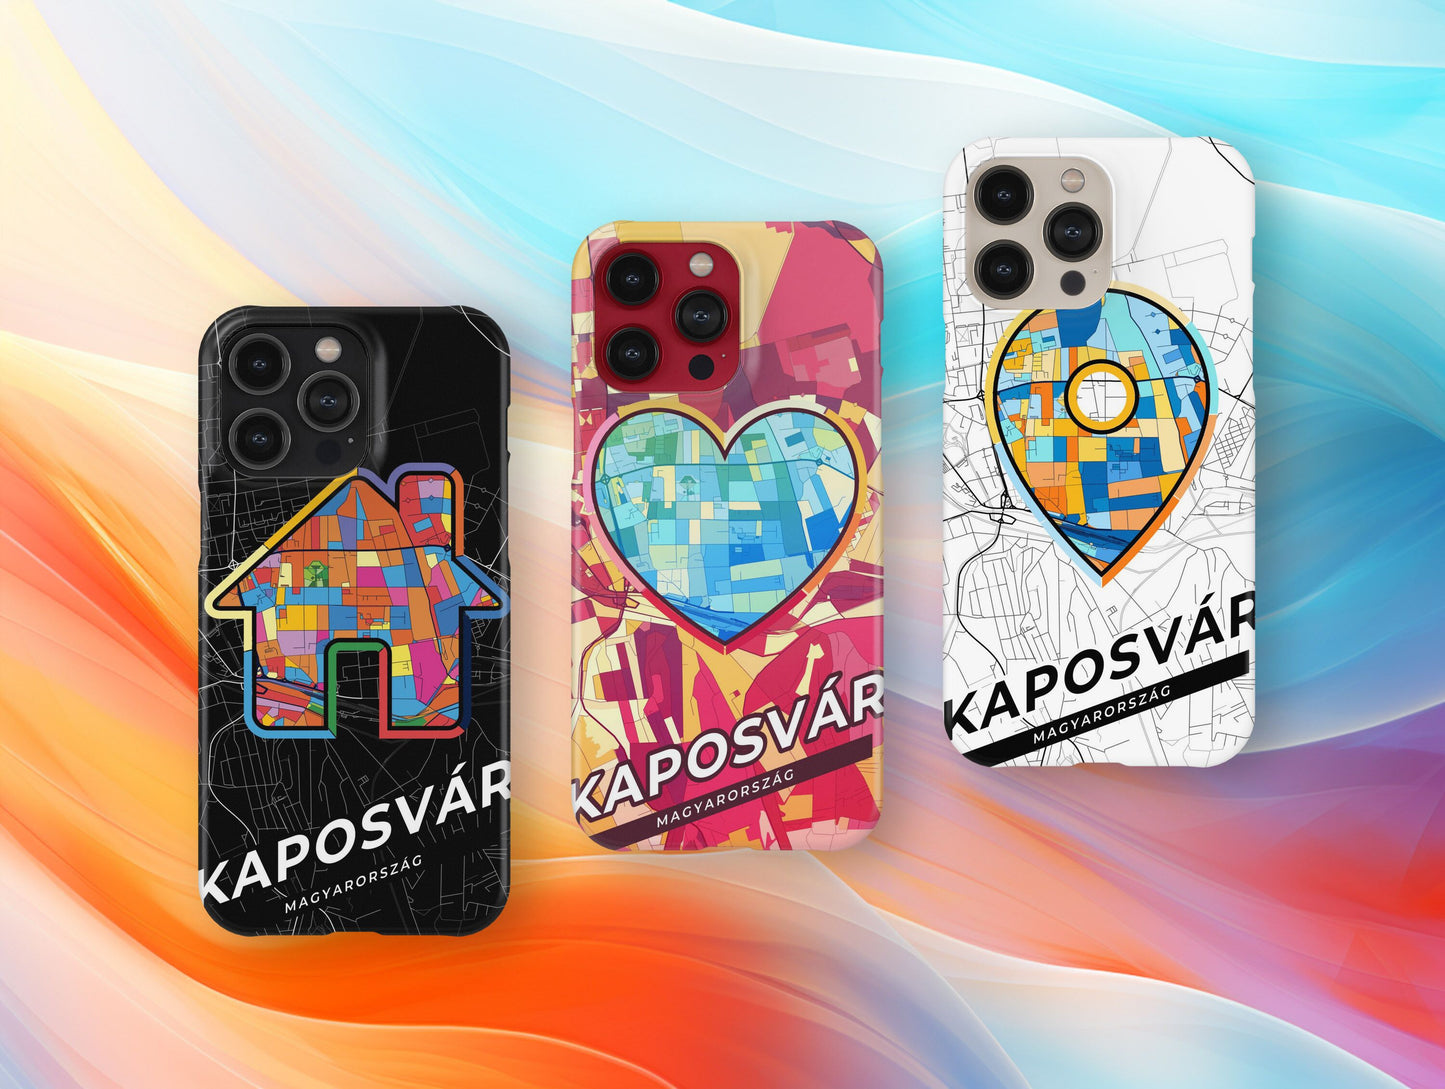 Kaposvár Hungary slim phone case with colorful icon. Birthday, wedding or housewarming gift. Couple match cases.